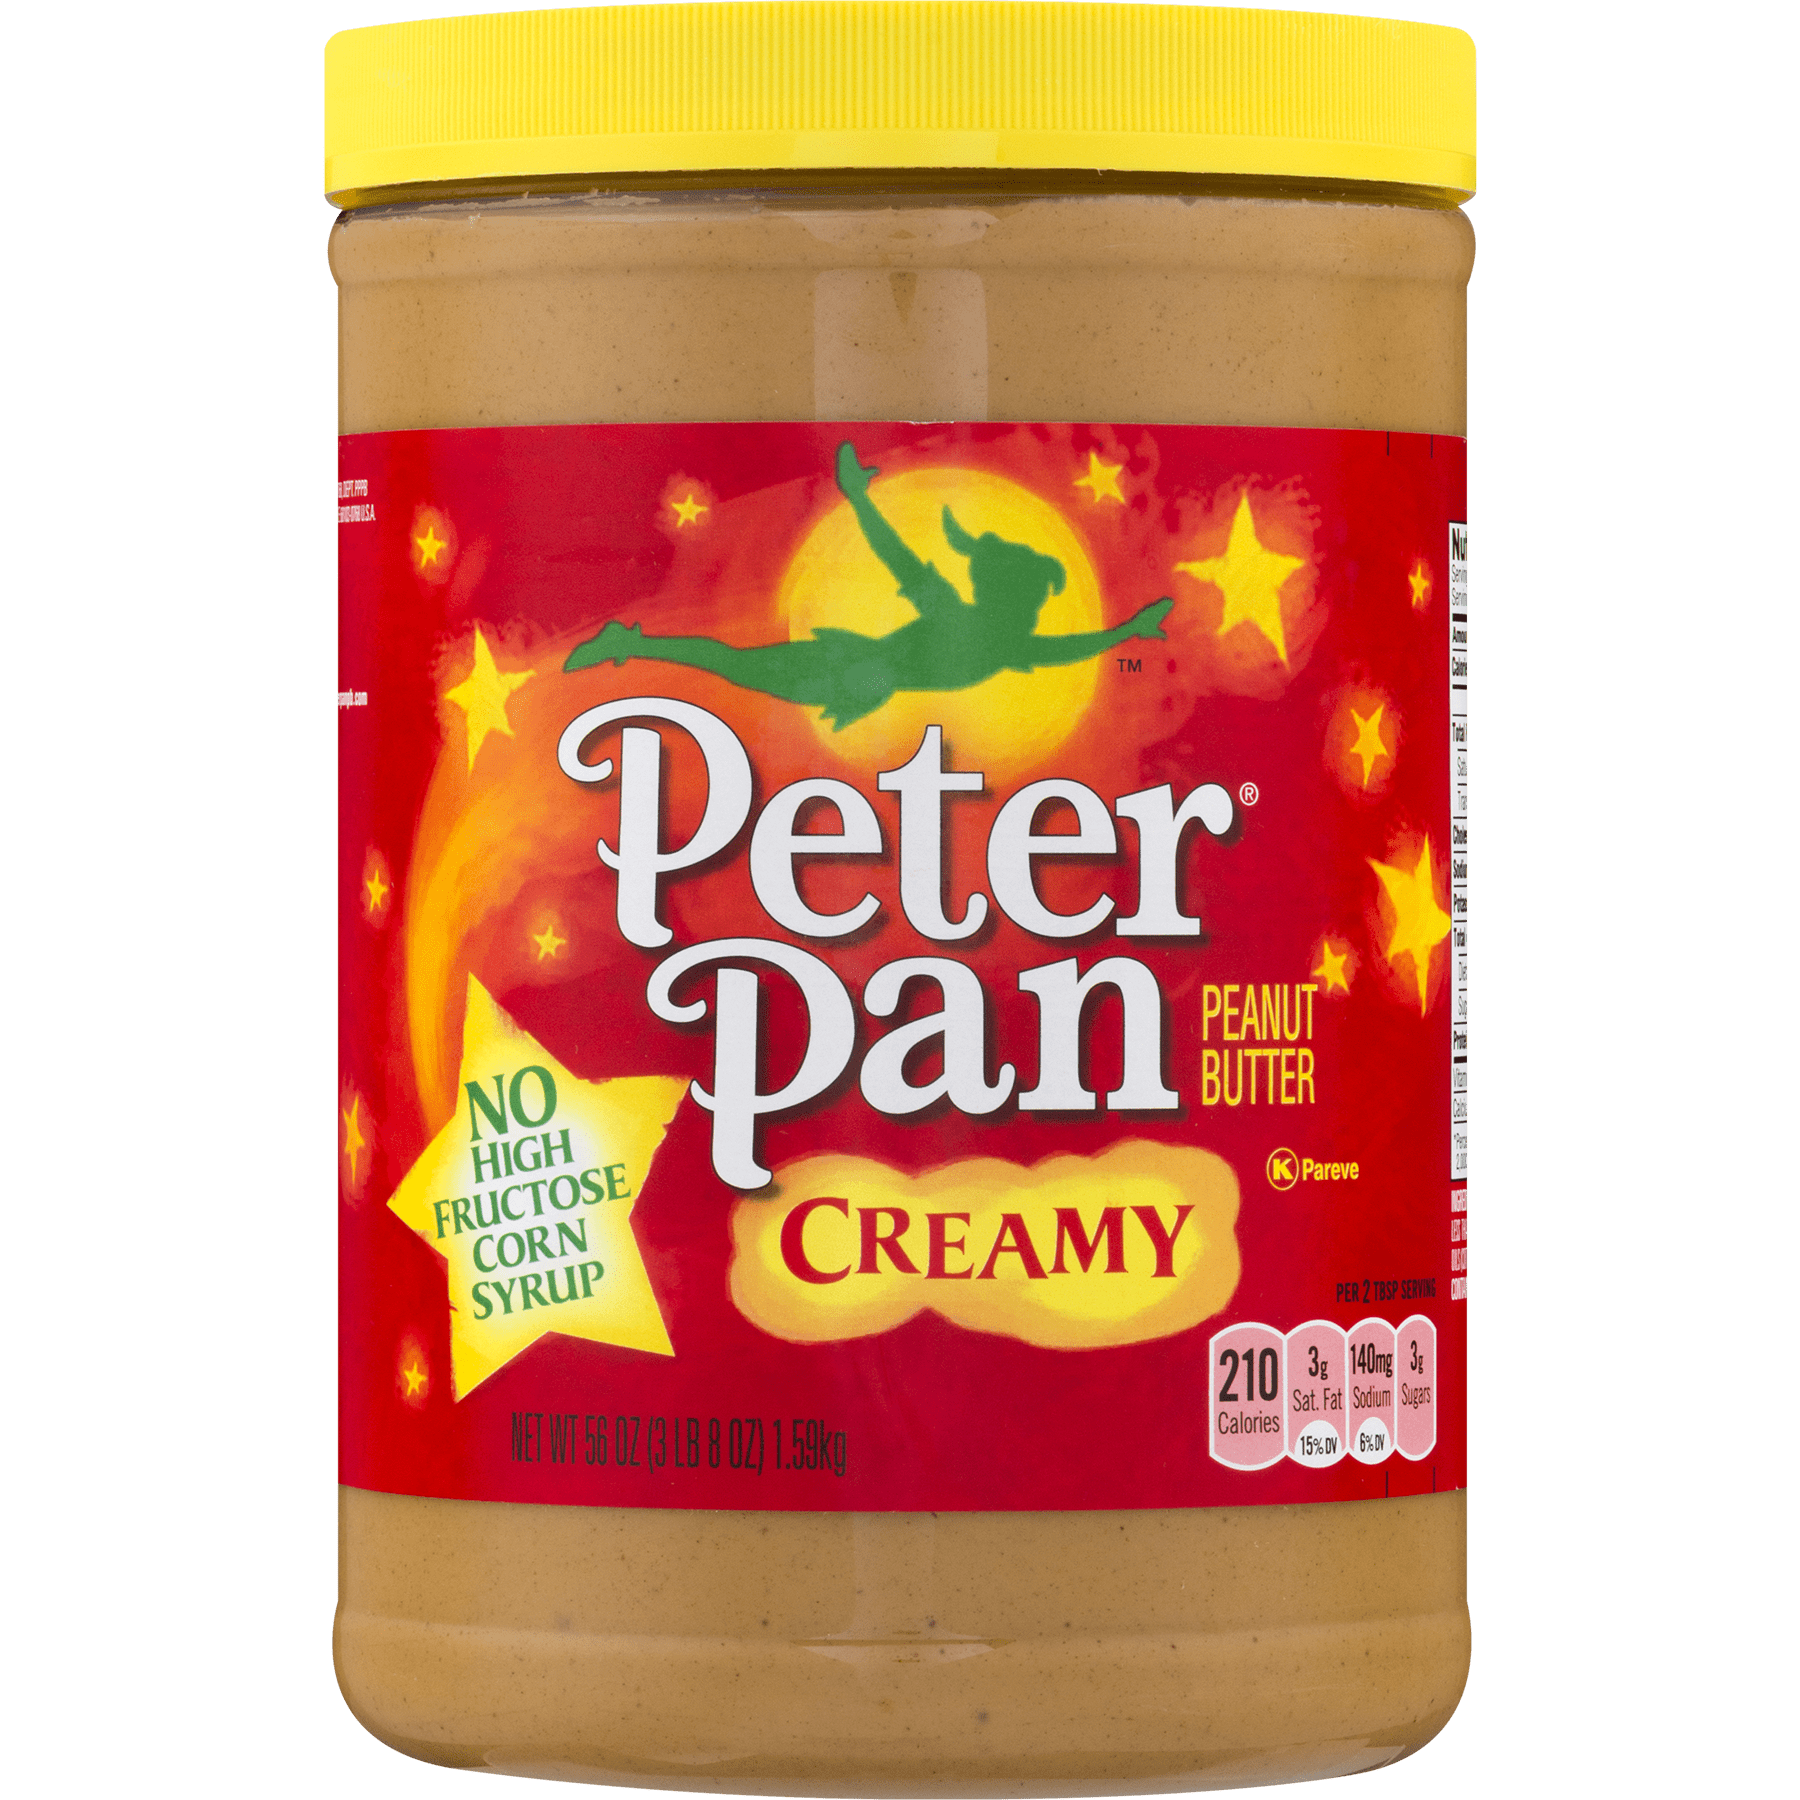 Peter Pan Creamy Original Peanut Butter, 56 oz